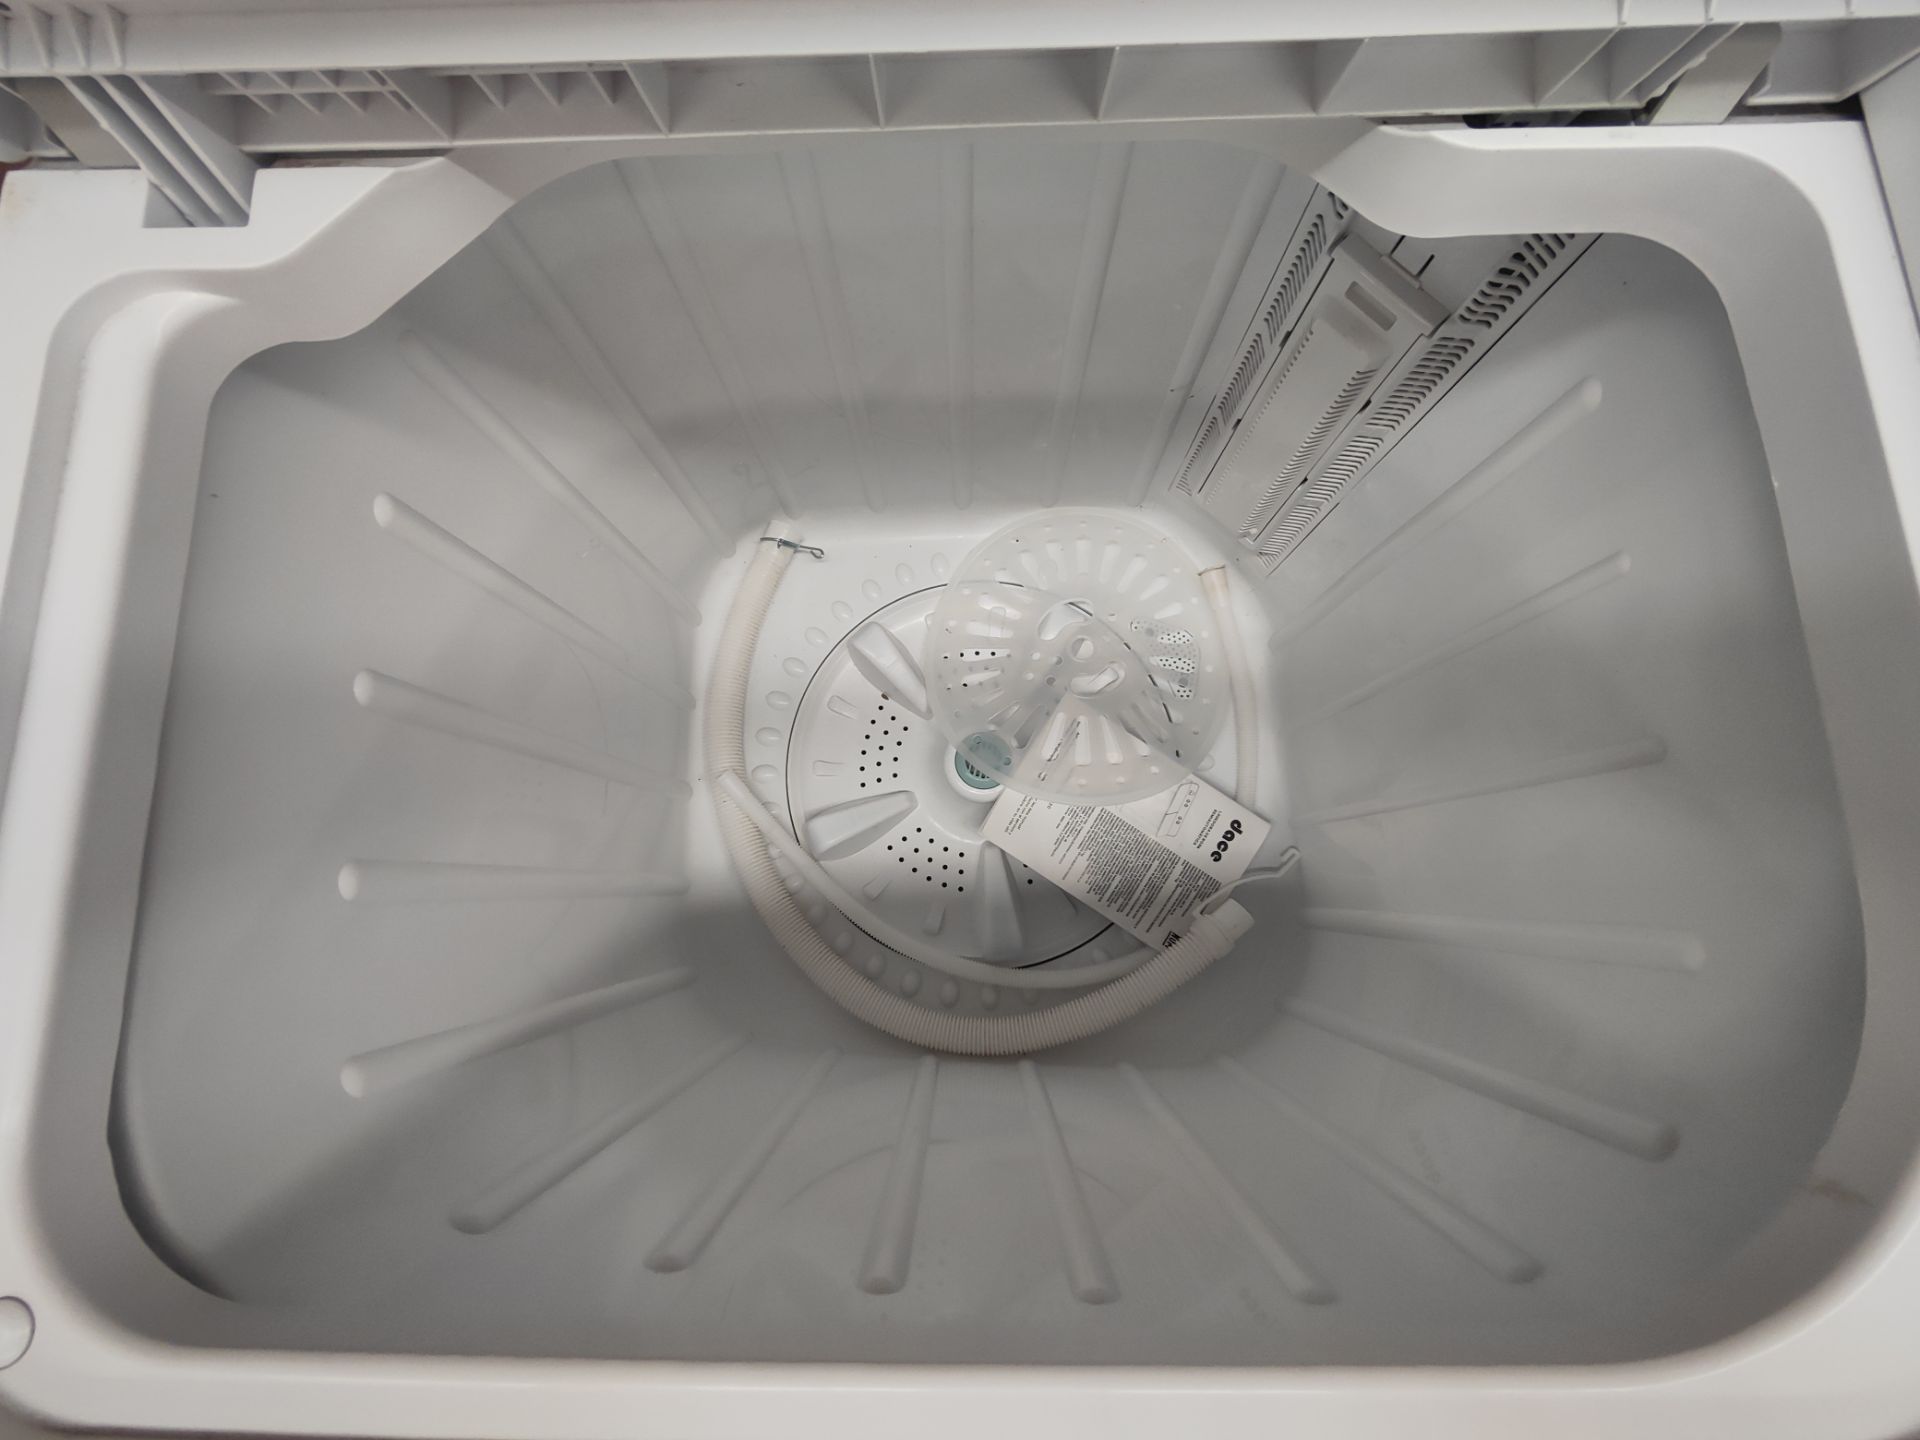 Lote de 3 lavadoras contiene: 1 lavadora de 20 KG marca DACE, Modelo LS2002C, Serie 08569, Color BL - Image 5 of 9